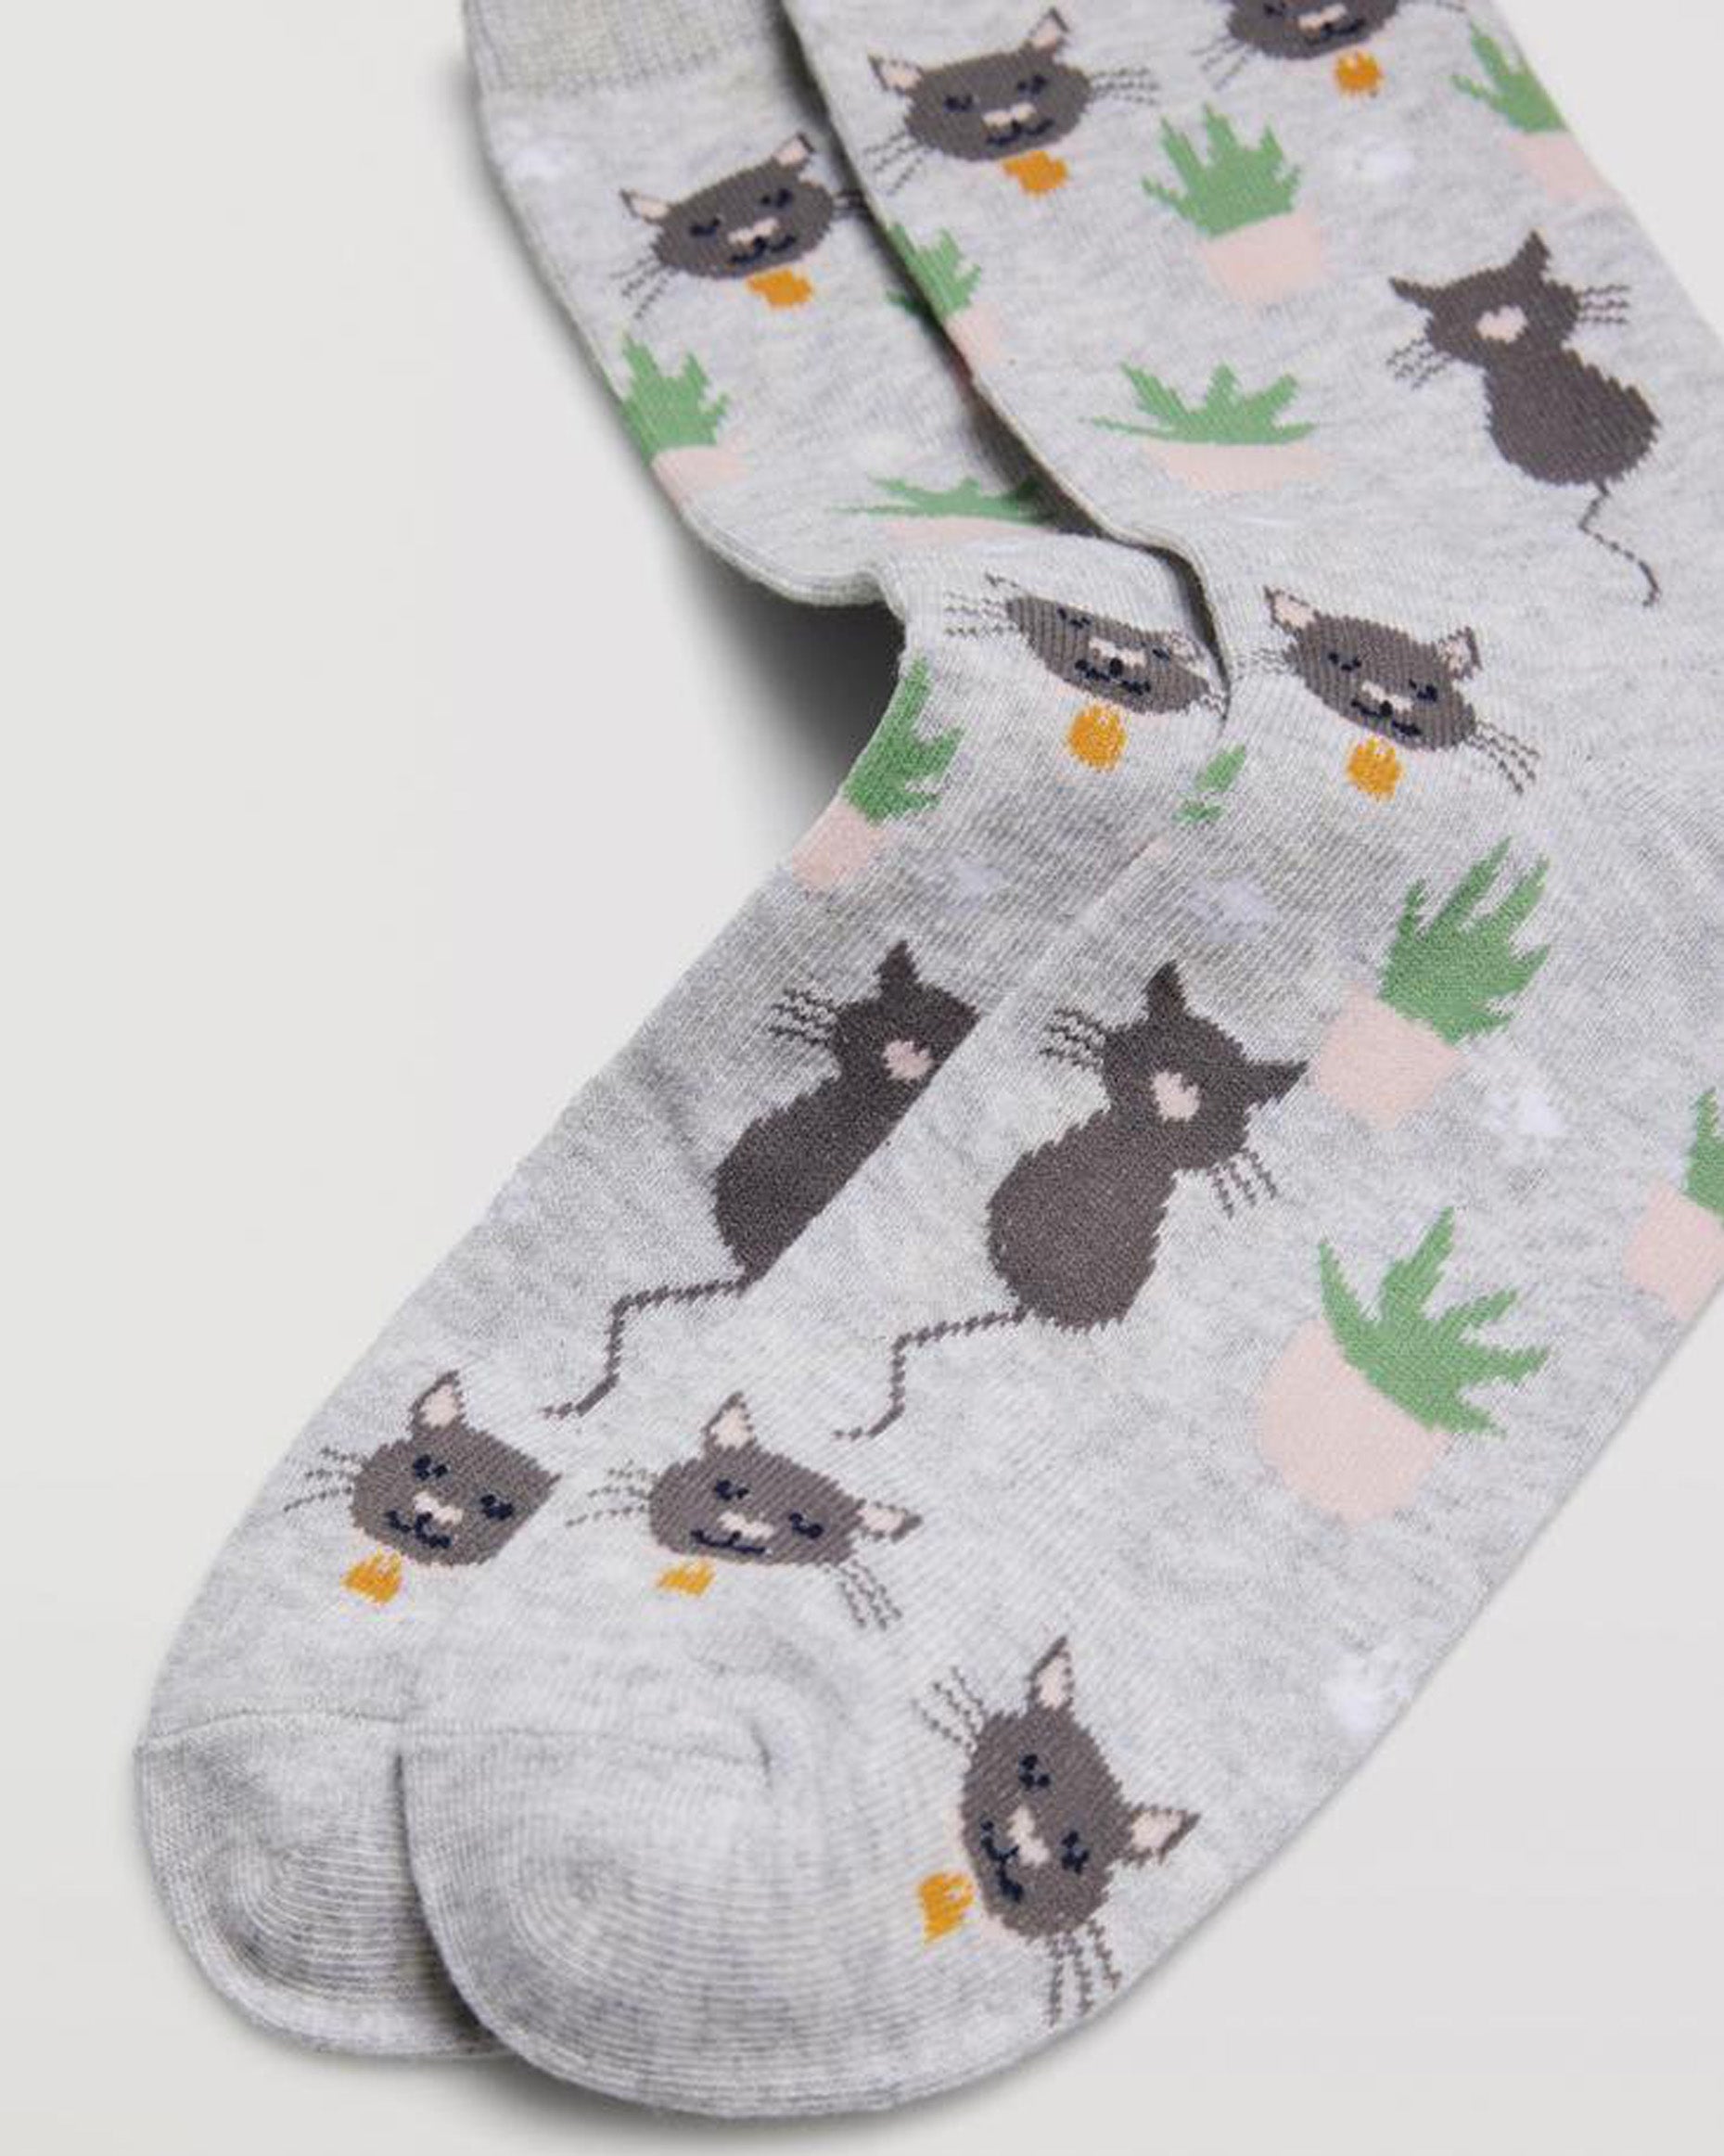 Ysabel Mora 12874 Cat & Houseplant Sock - Light grey cotton crew socks with a grey cat and houseplant pattern, shaped heel, flat toe seam.